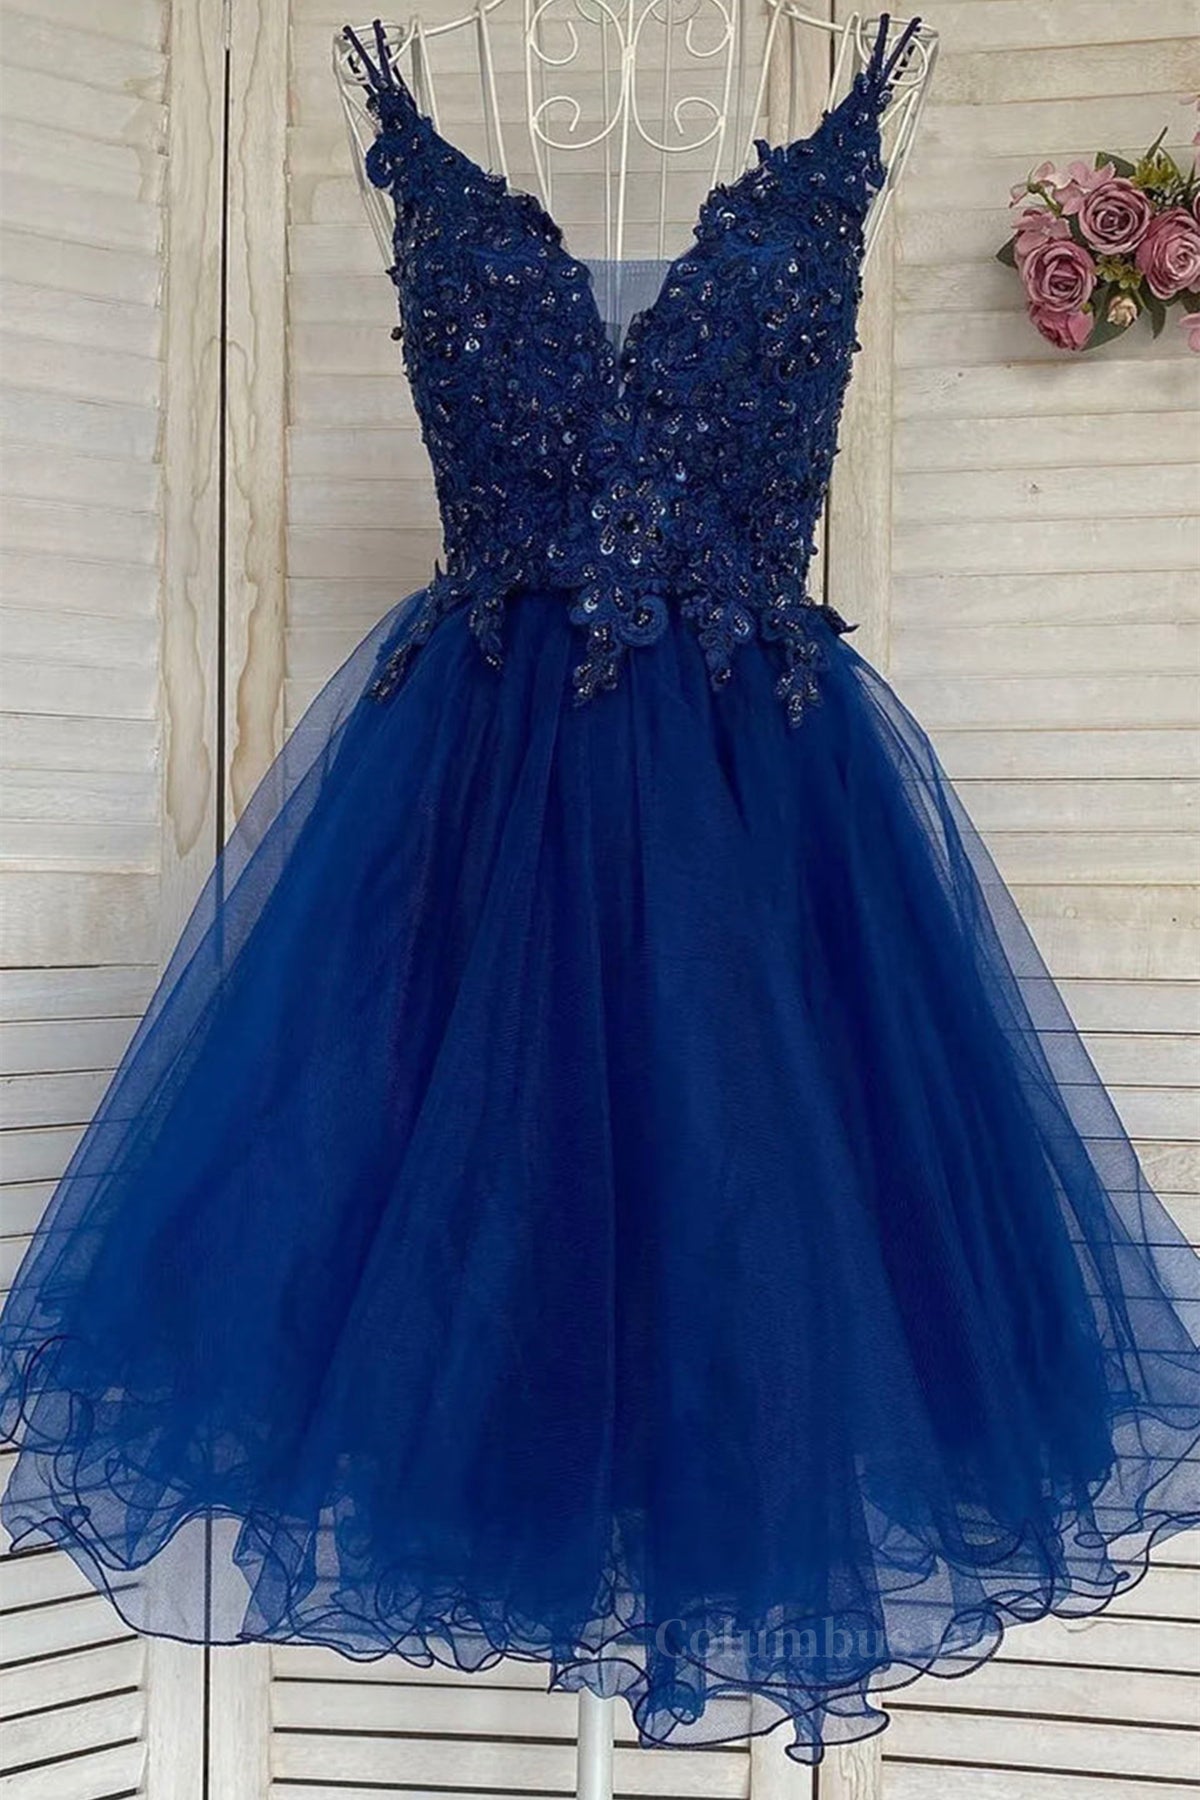 Bridesmaid Dress Pink, V Neck Short Blue Lace Prom Dress, Blue Lace Homecoming Dress, Short Blue Formal Graduation Evening Dress